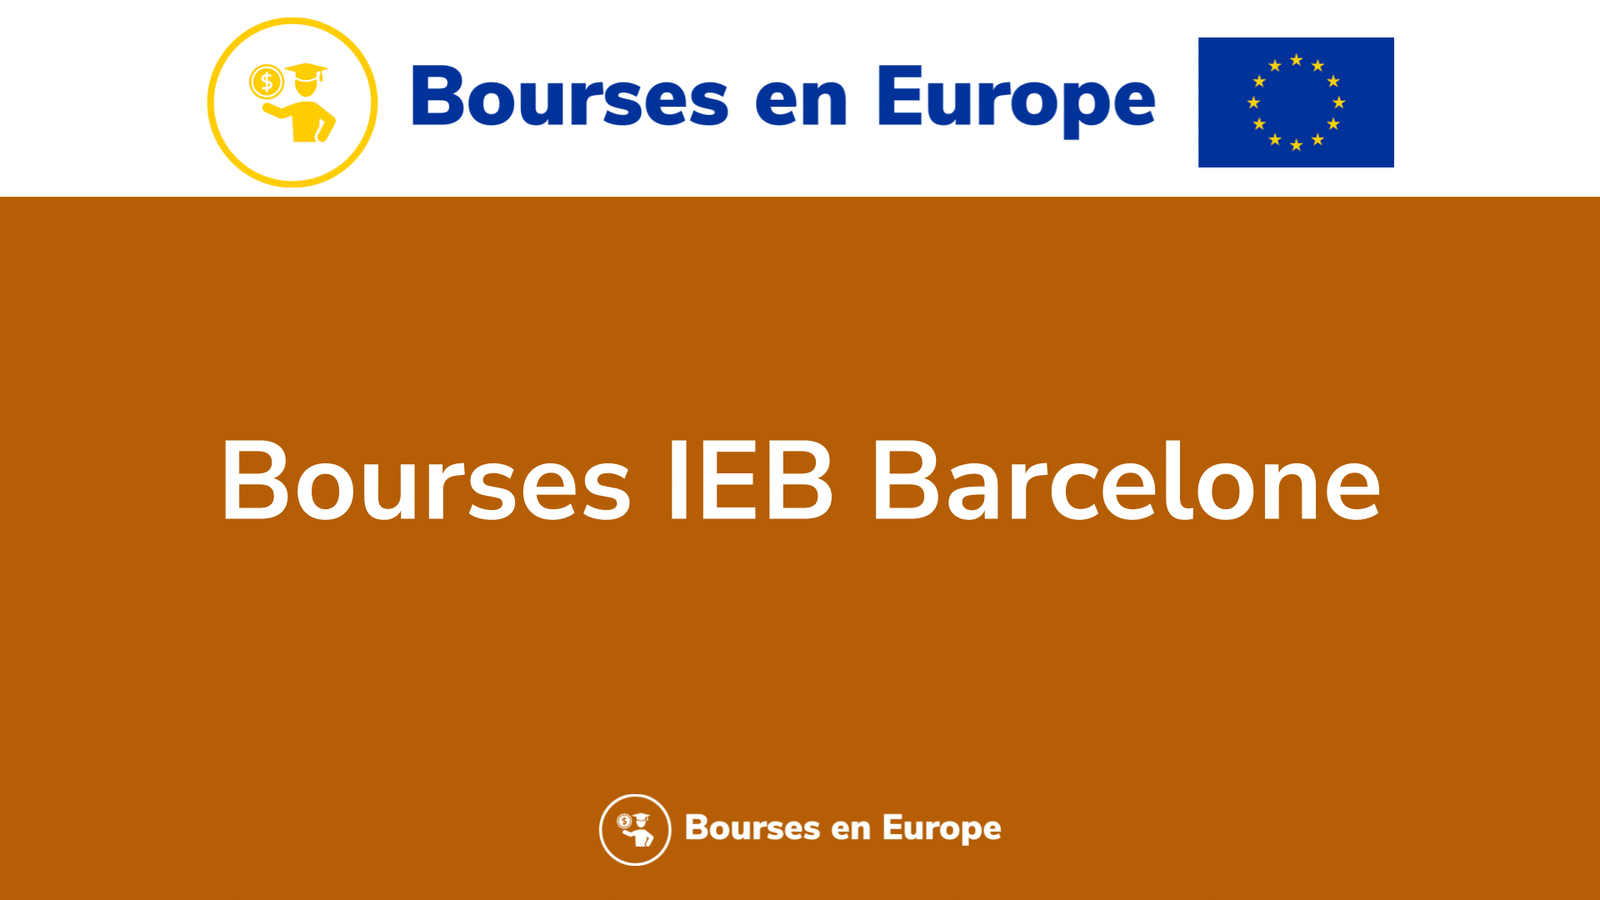 Bourses IEB Barcelone